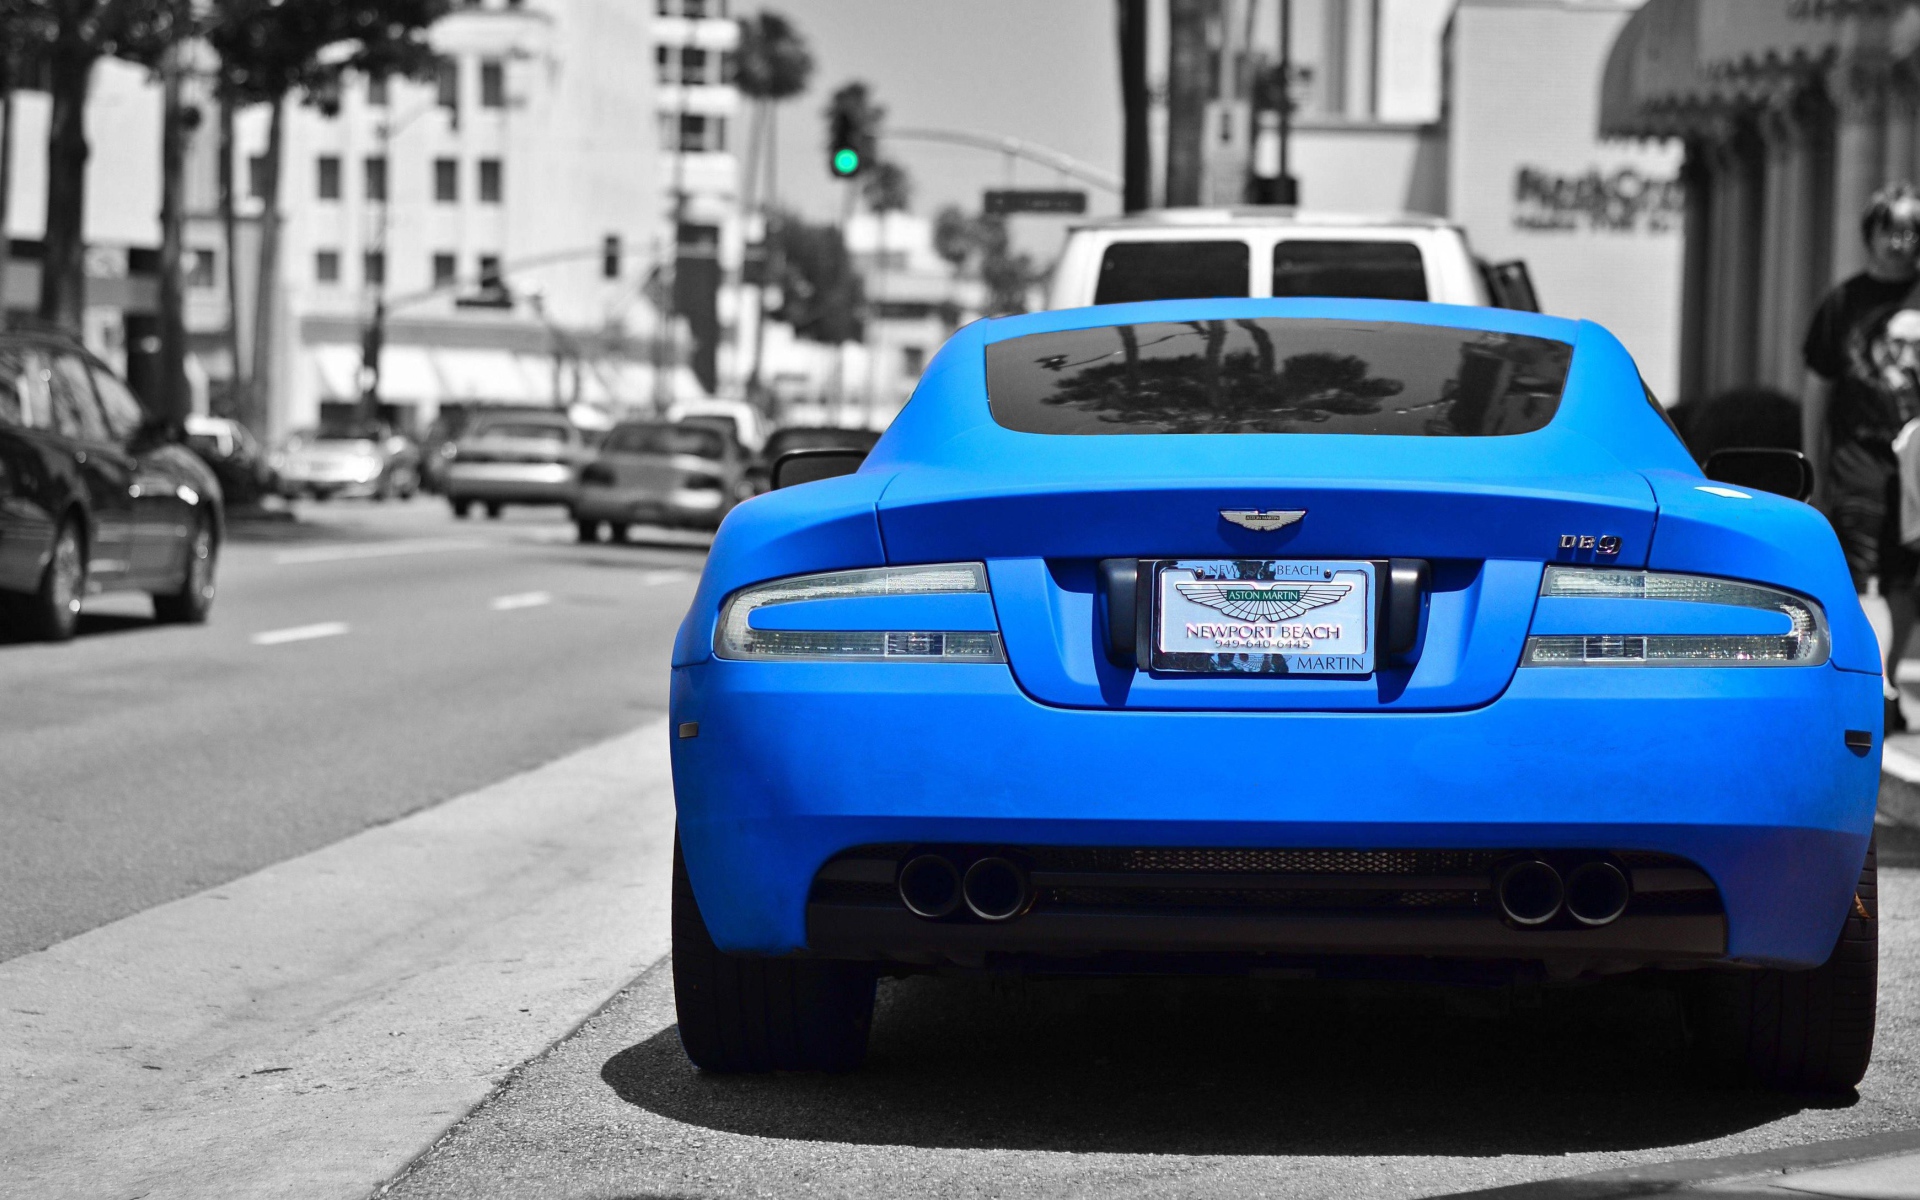 Вид сзади на голубой Aston Martin